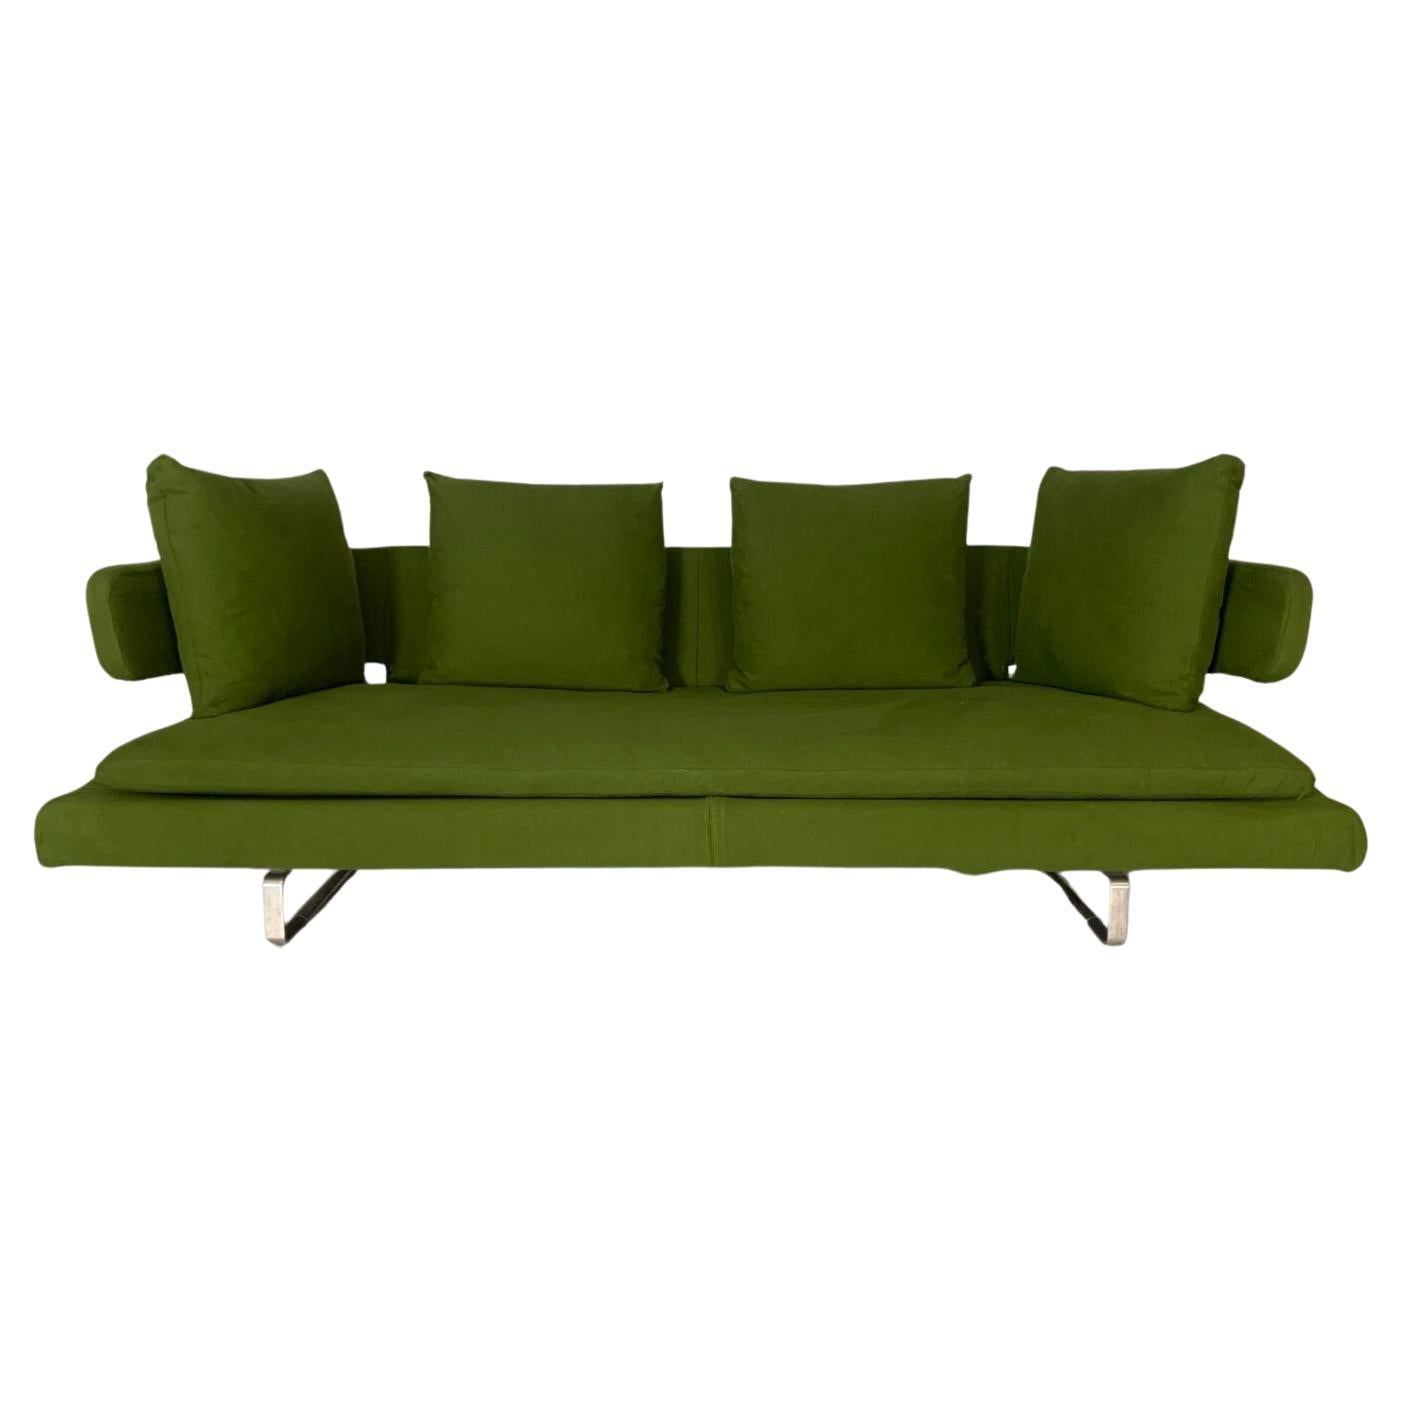 B&B Italia "Arne A252C" 3-Seat Sofa - In Green Fabric For Sale